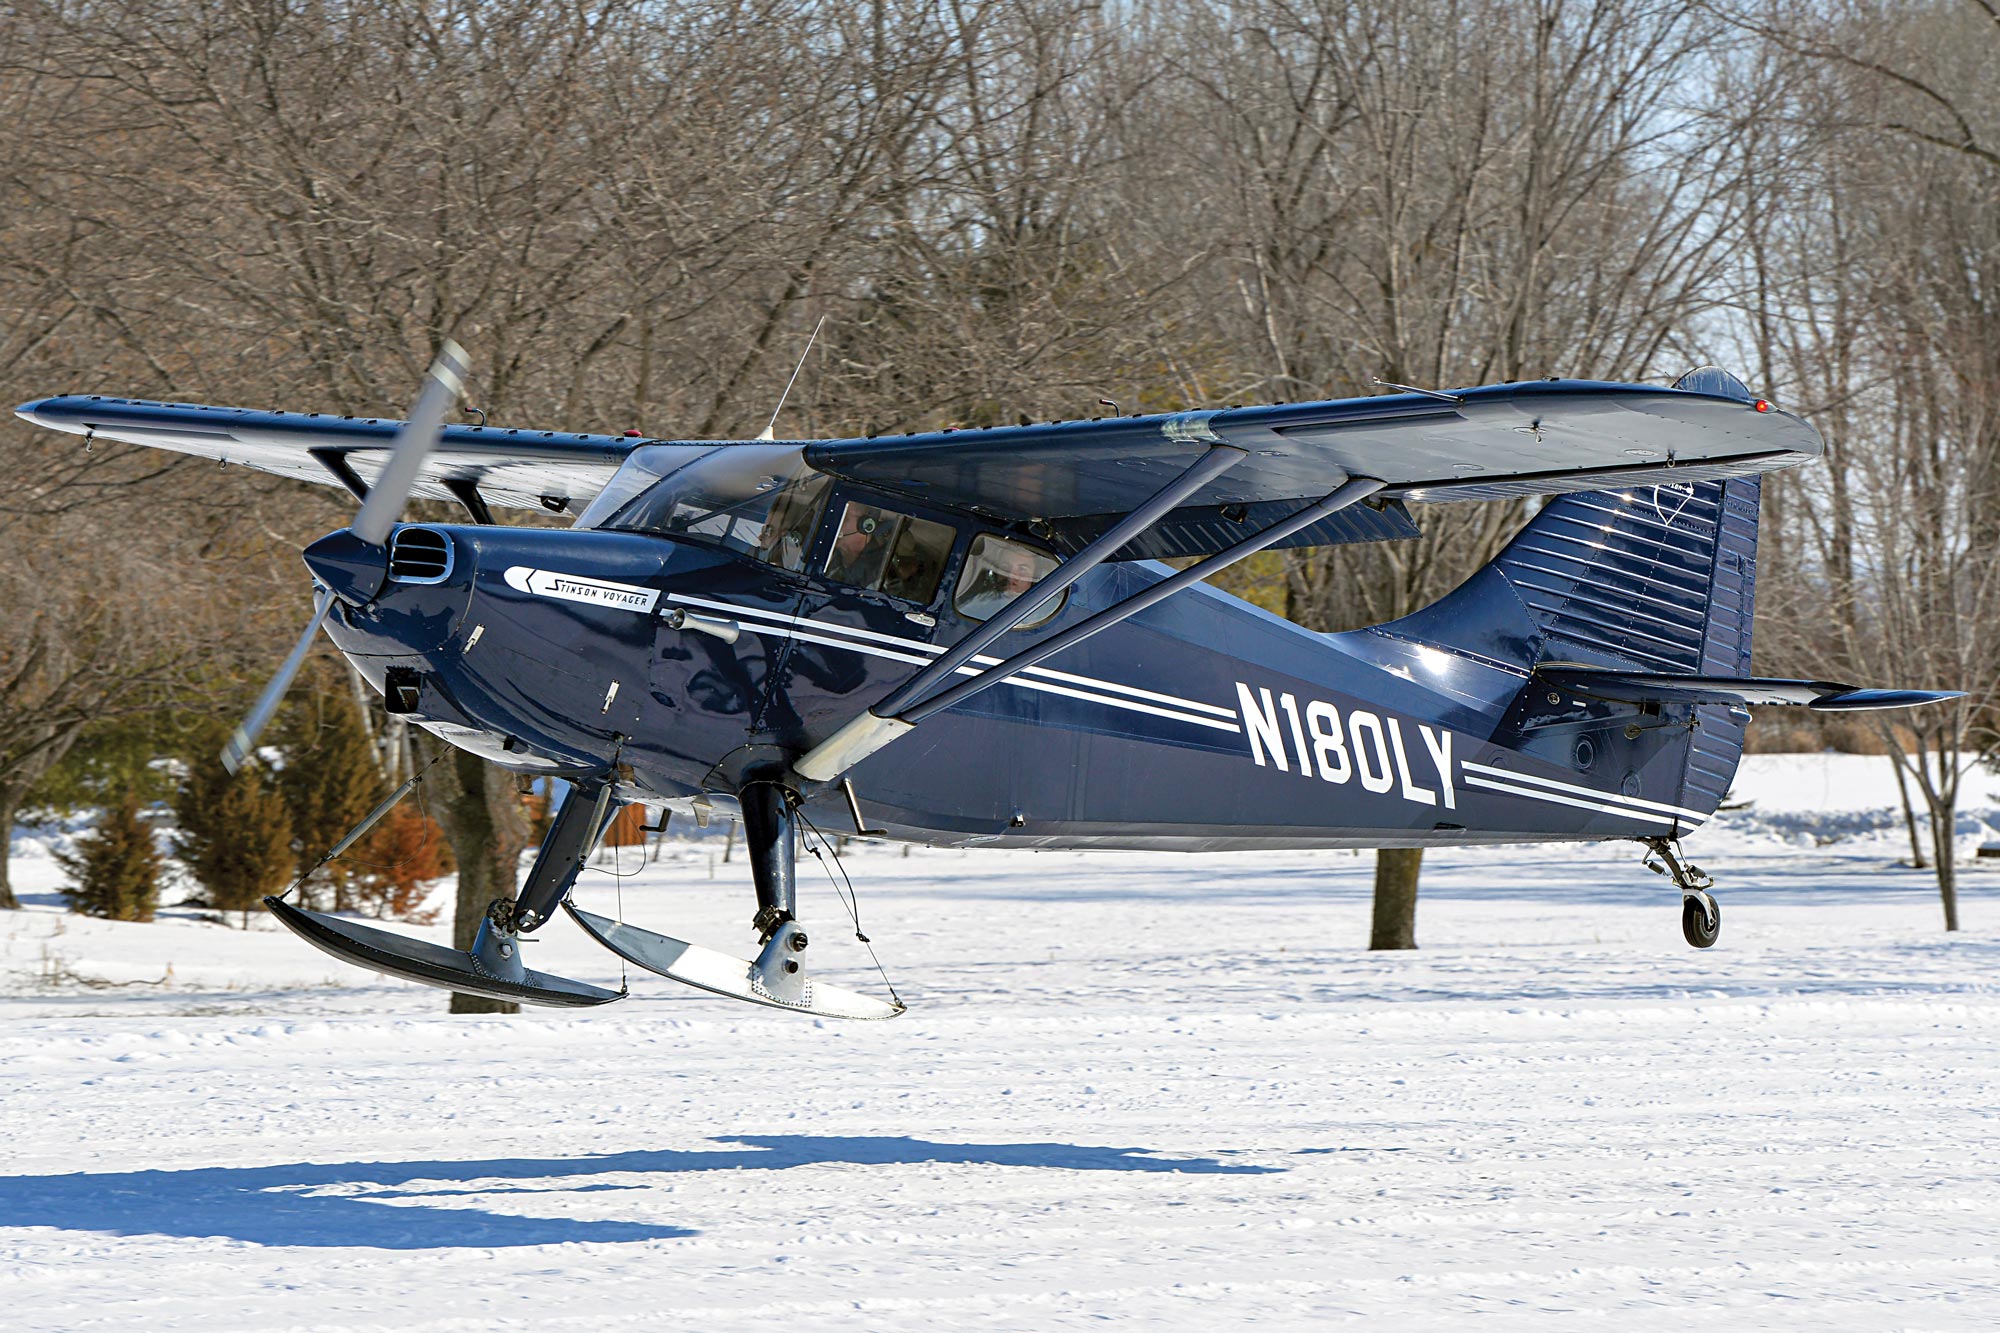 Stinson 108 classic aircraft on skis